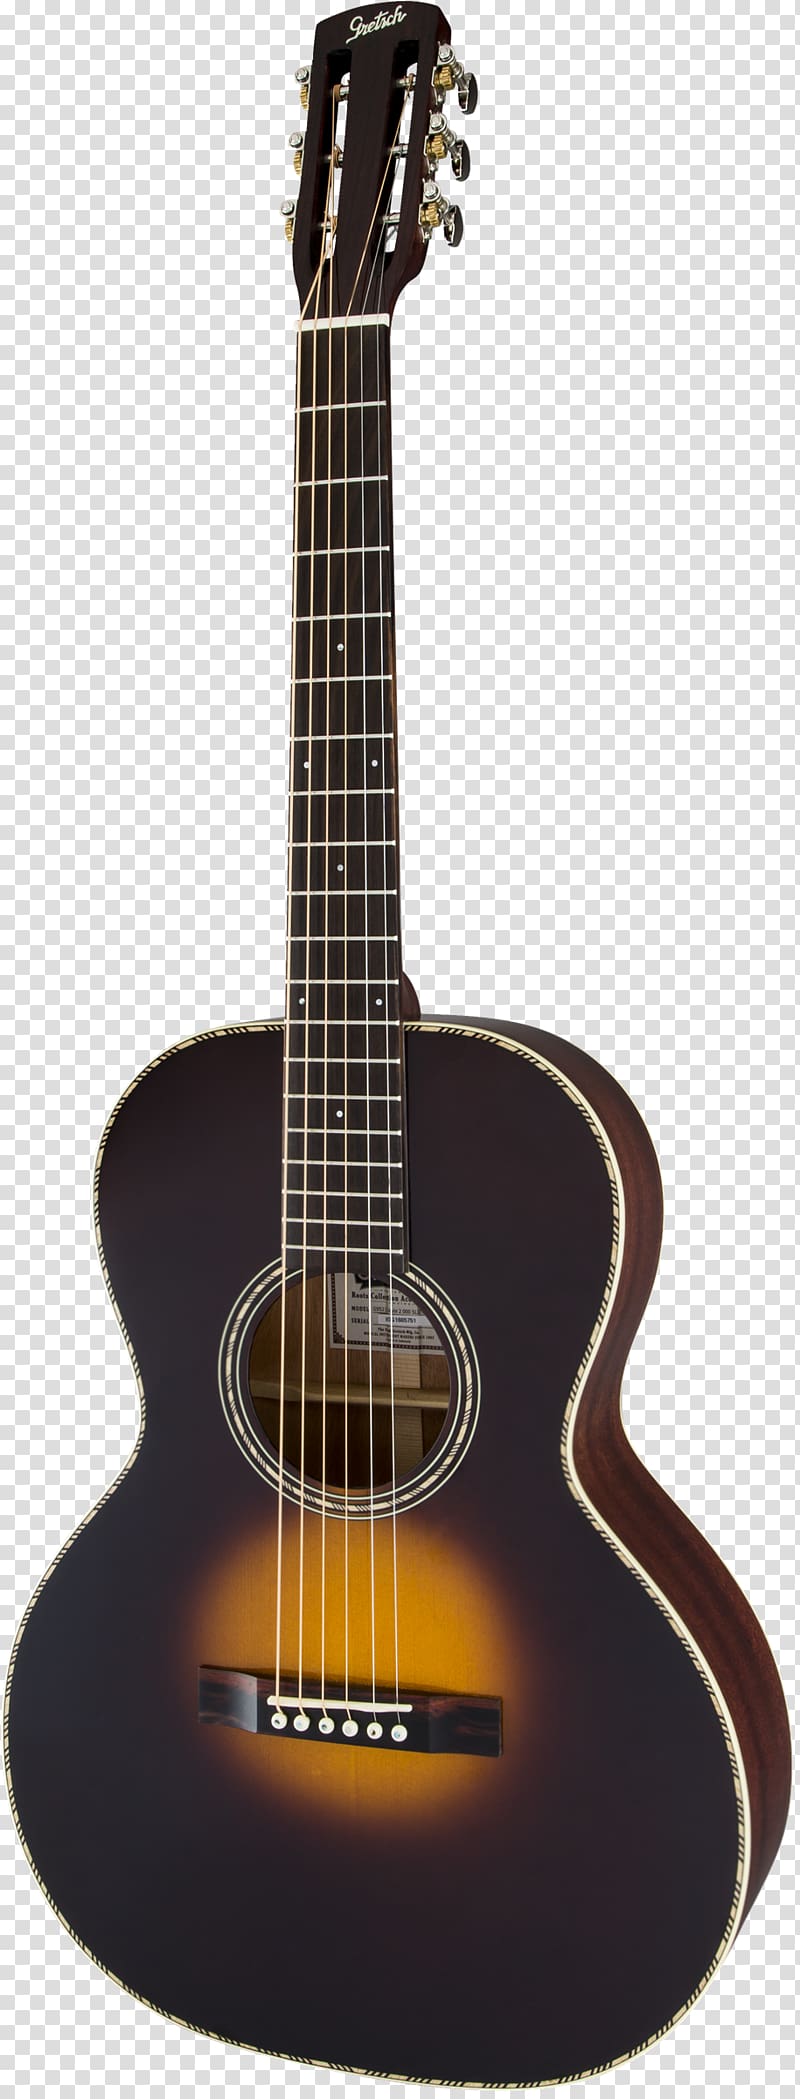 Gretsch Acoustic guitar Music Fingerboard, Gretsch transparent background PNG clipart